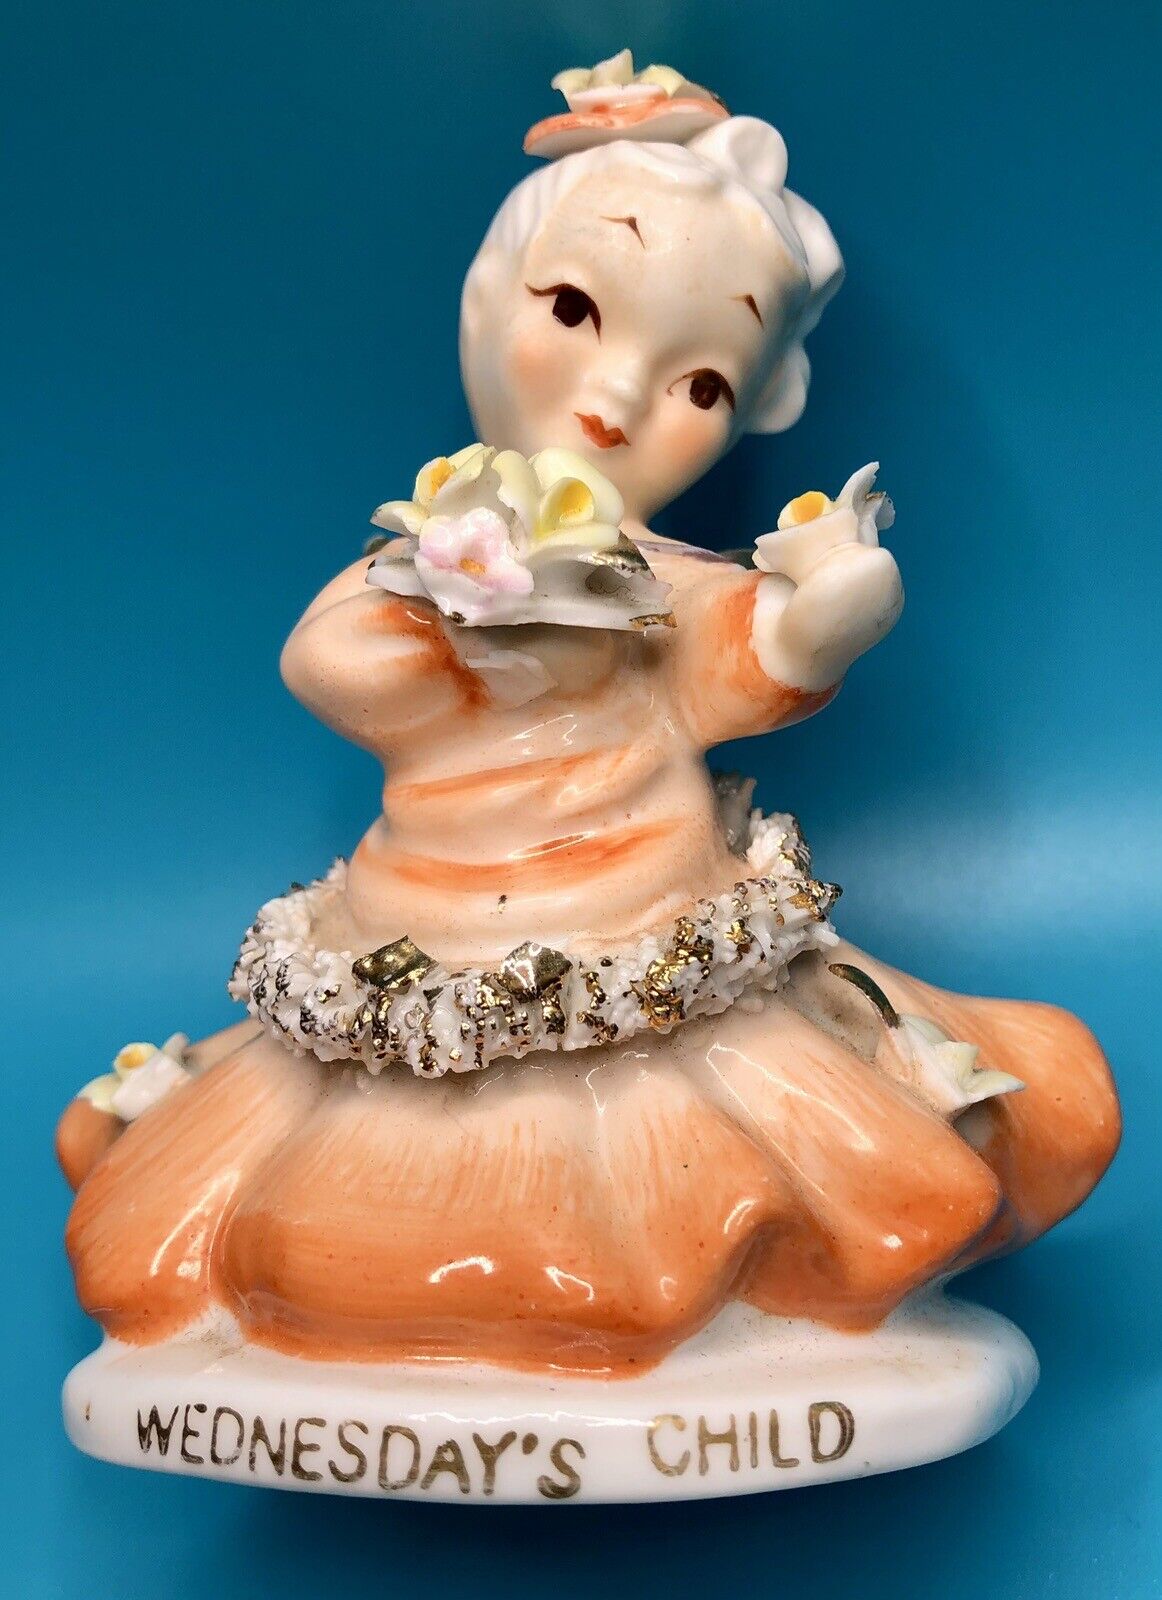 Vintage WEDNESDAY’S CHILD Angel Lefton China K8281 Collectible Figurine